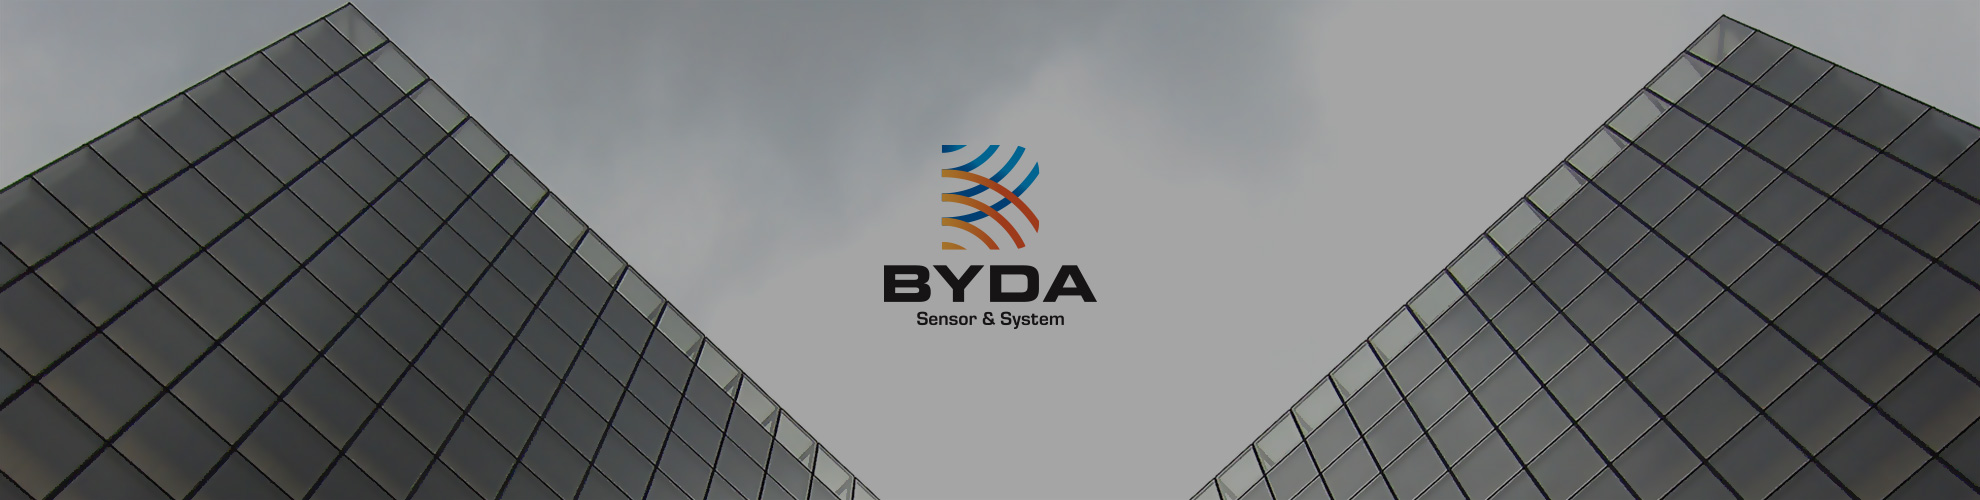 BYDA Sensor & System